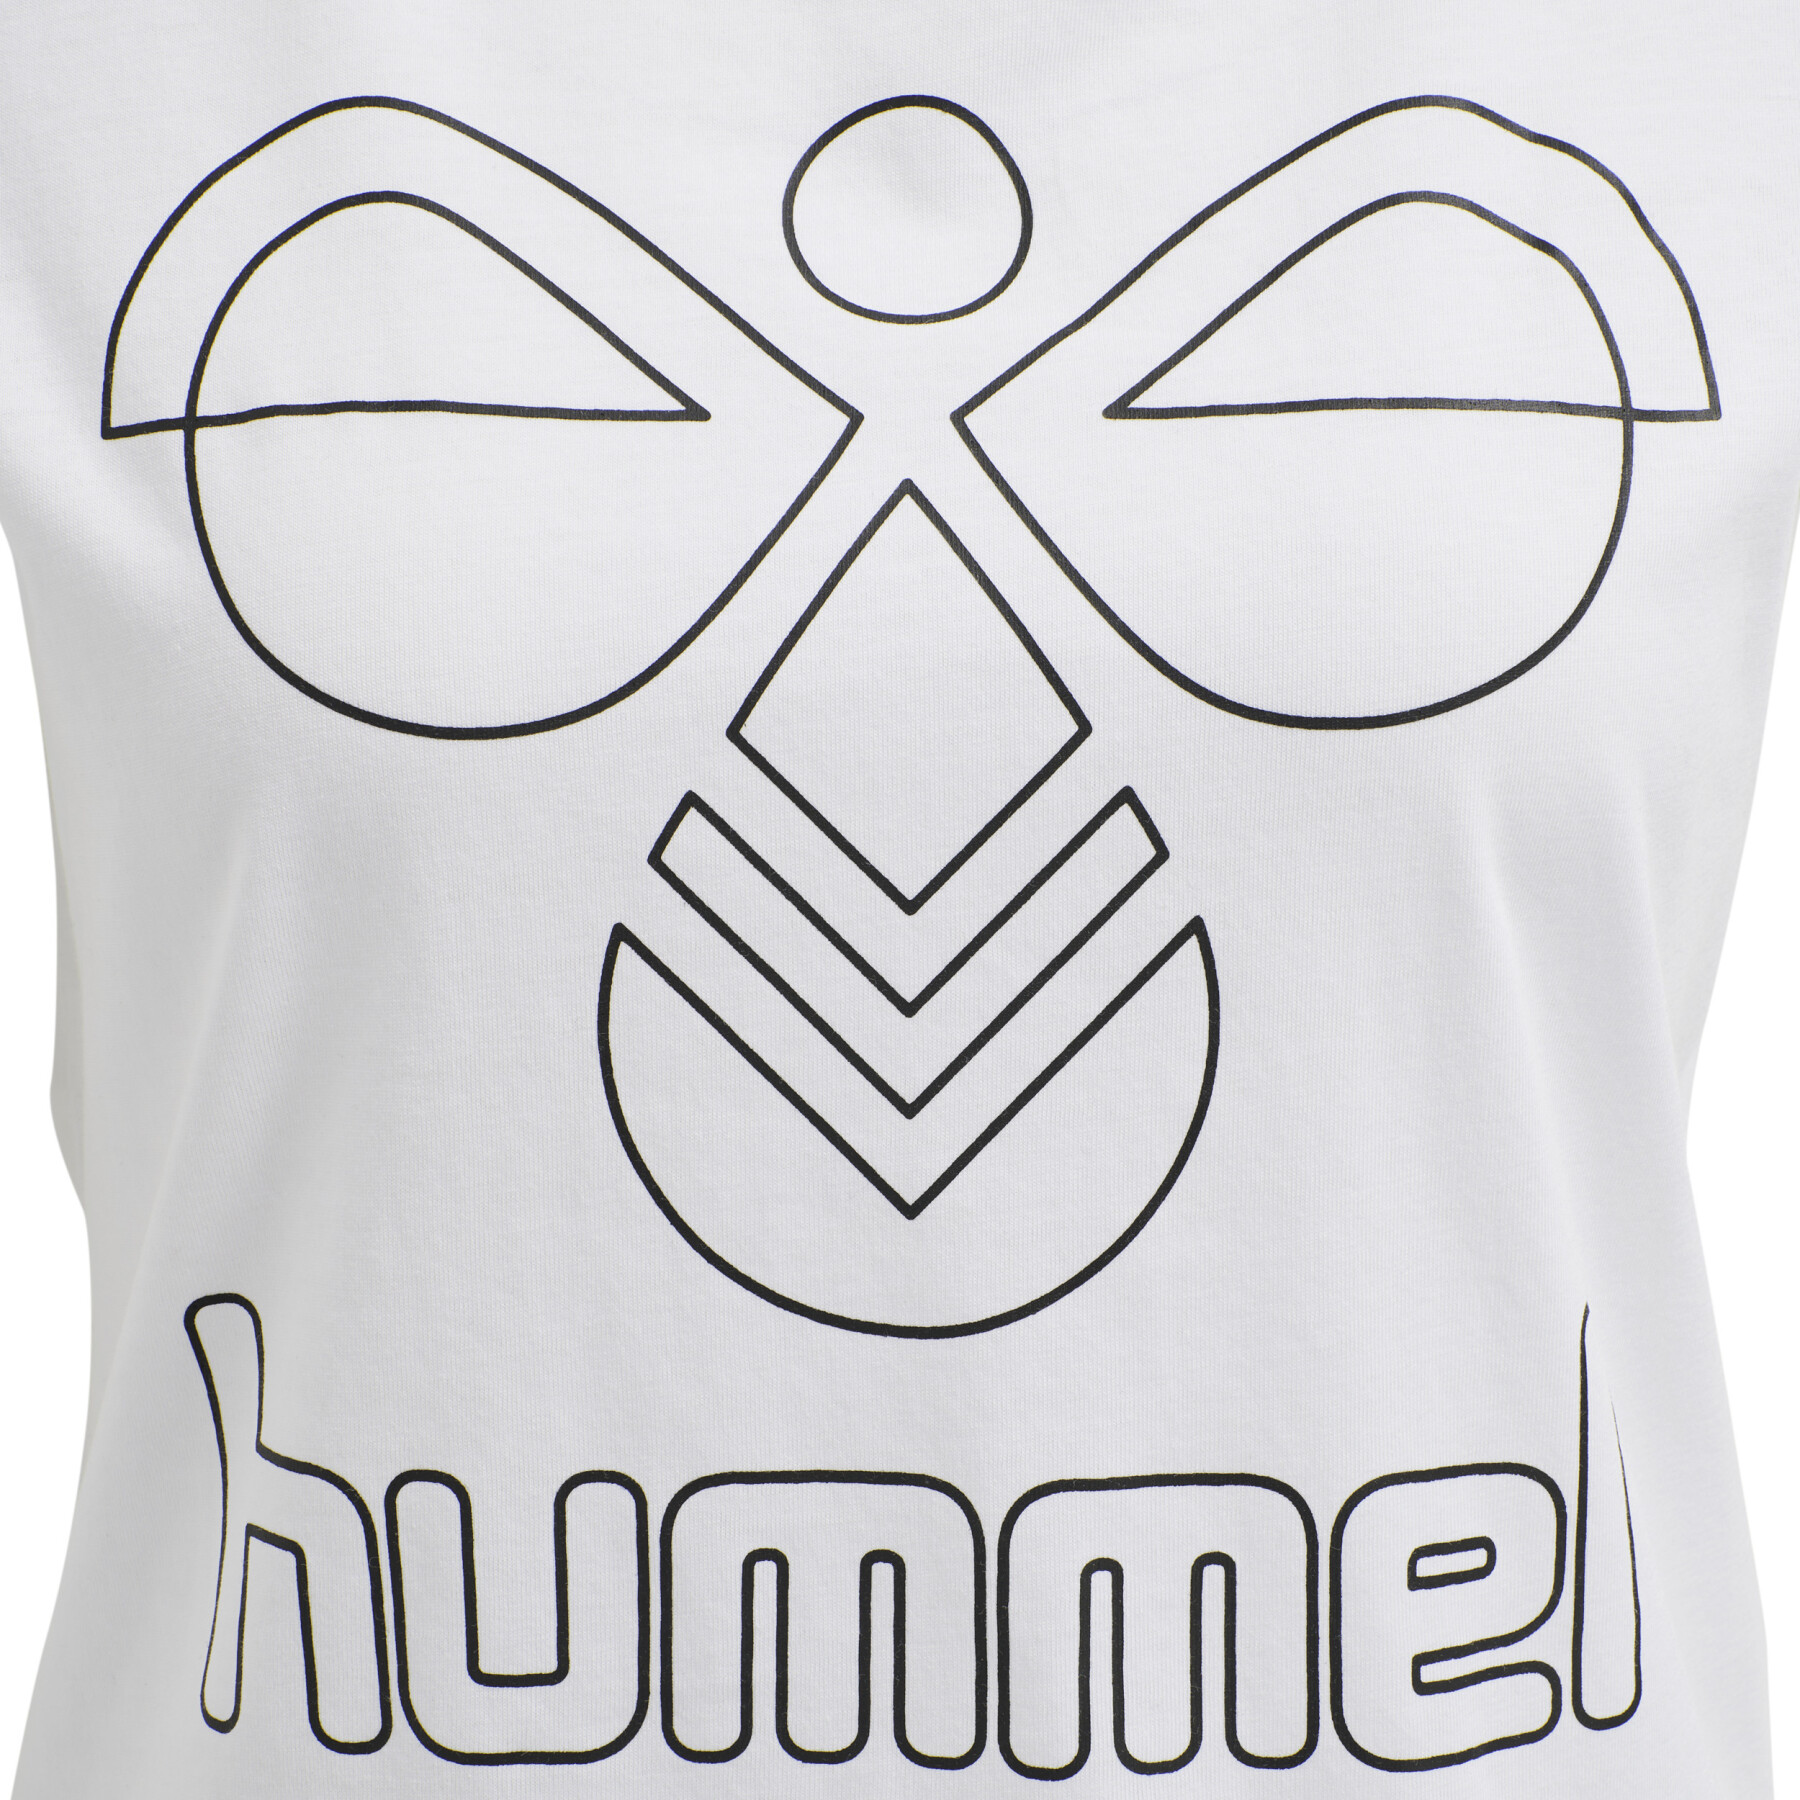 Dames-T-shirt Hummel hmlsenga